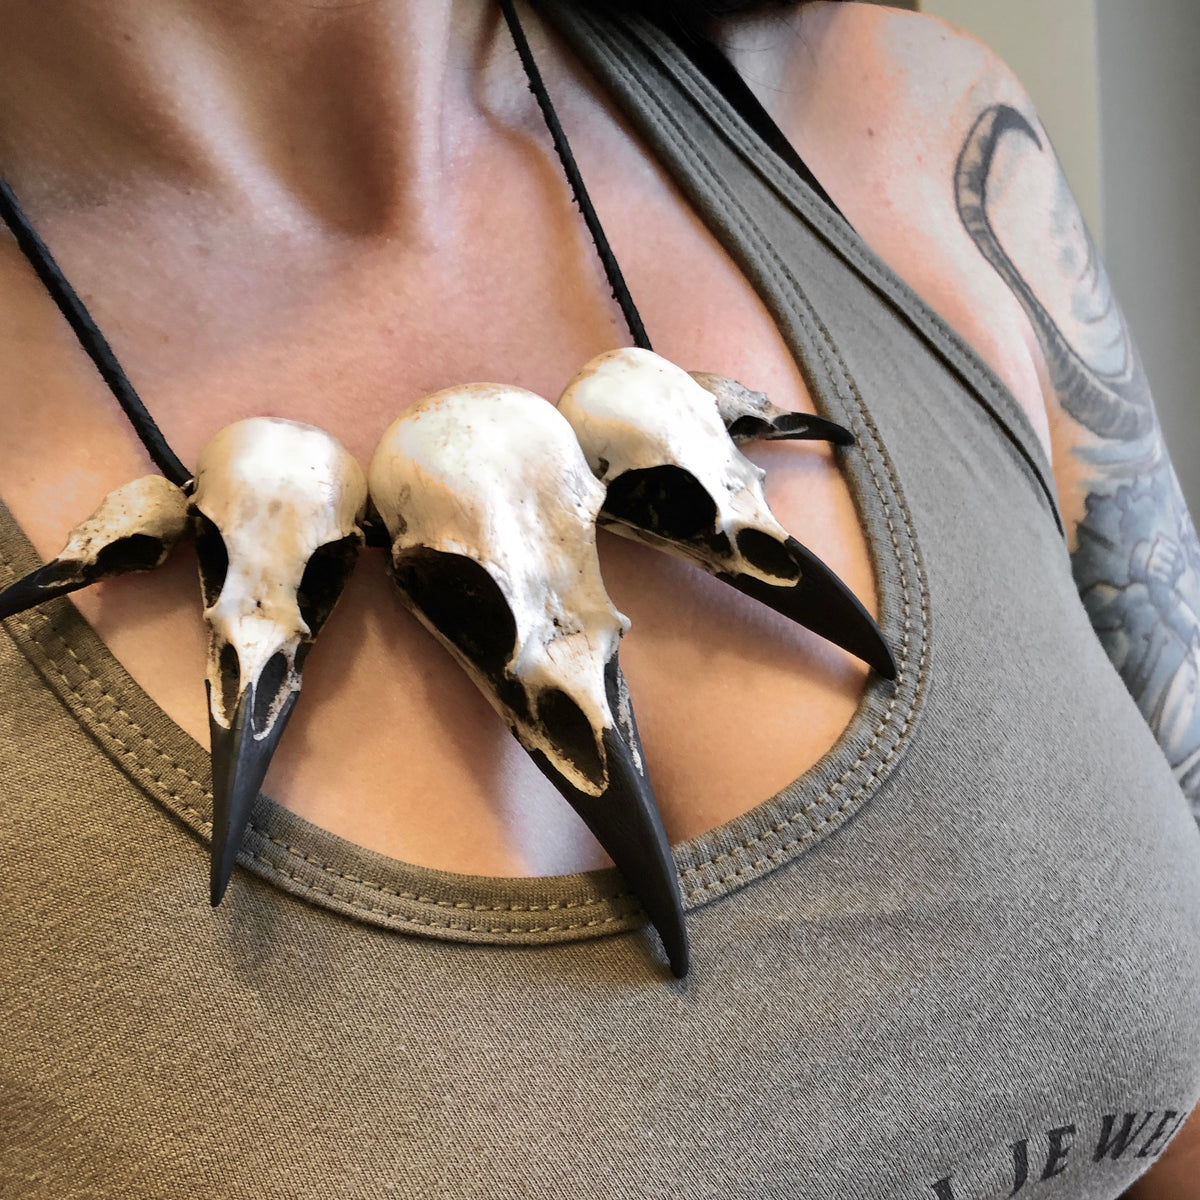 Ginger Snaps Movie Bird Skull Necklace Crow Pendant Goth 